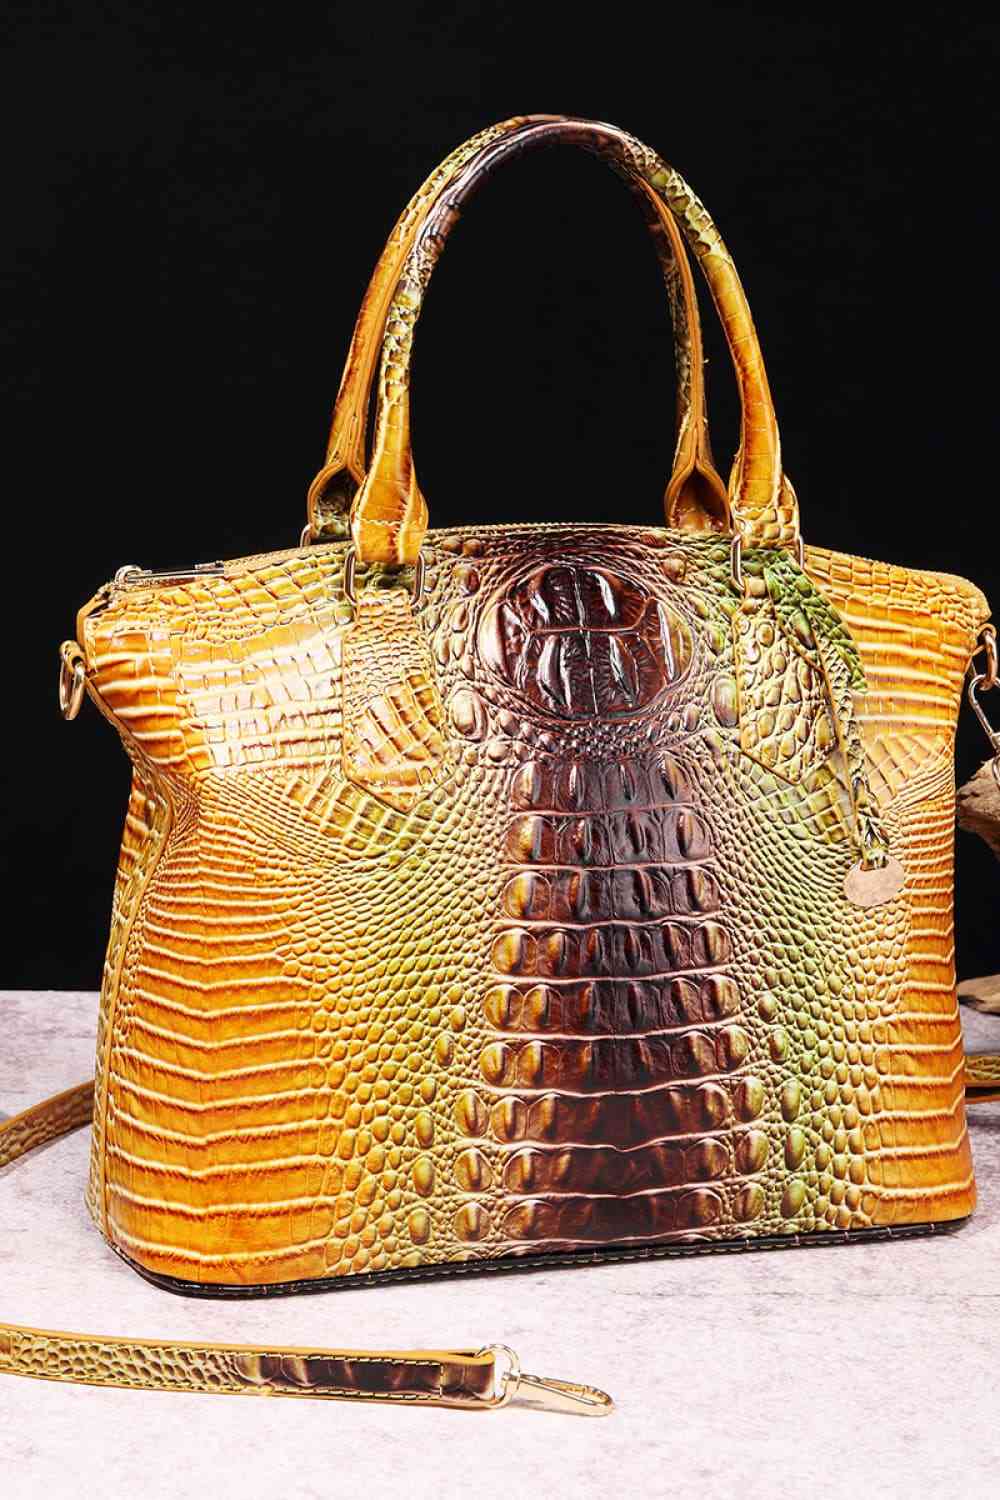 Gradient Print Lizard Skin Vegan Leather Handbag